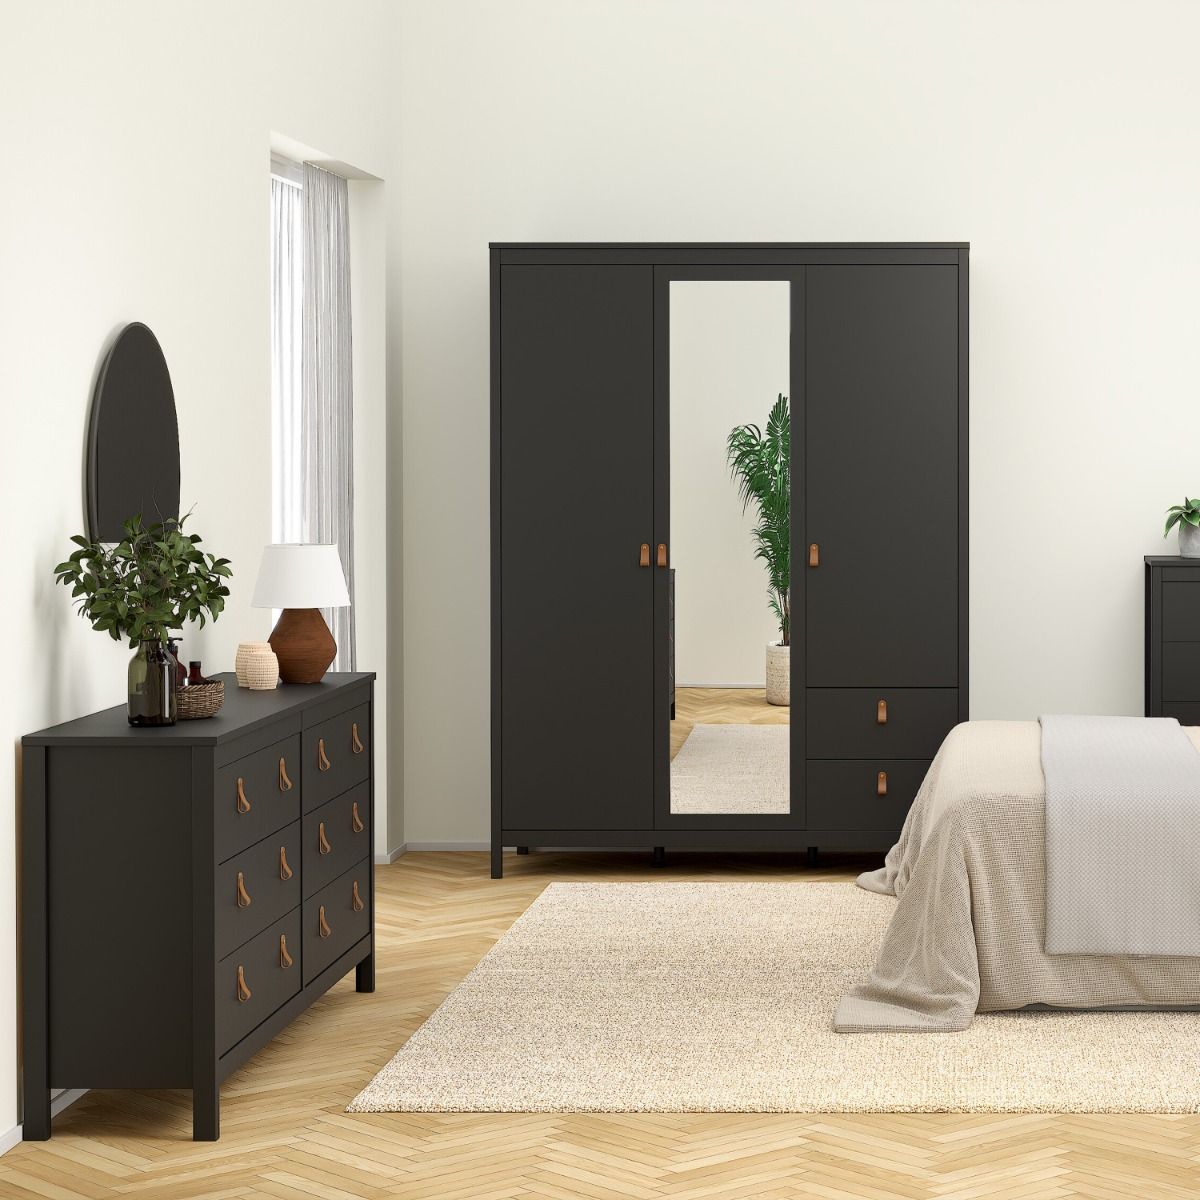 Furniture To Go Barcelona Double Dresser 4+4 Drawers Black Bedroom Set-Better Bed Company